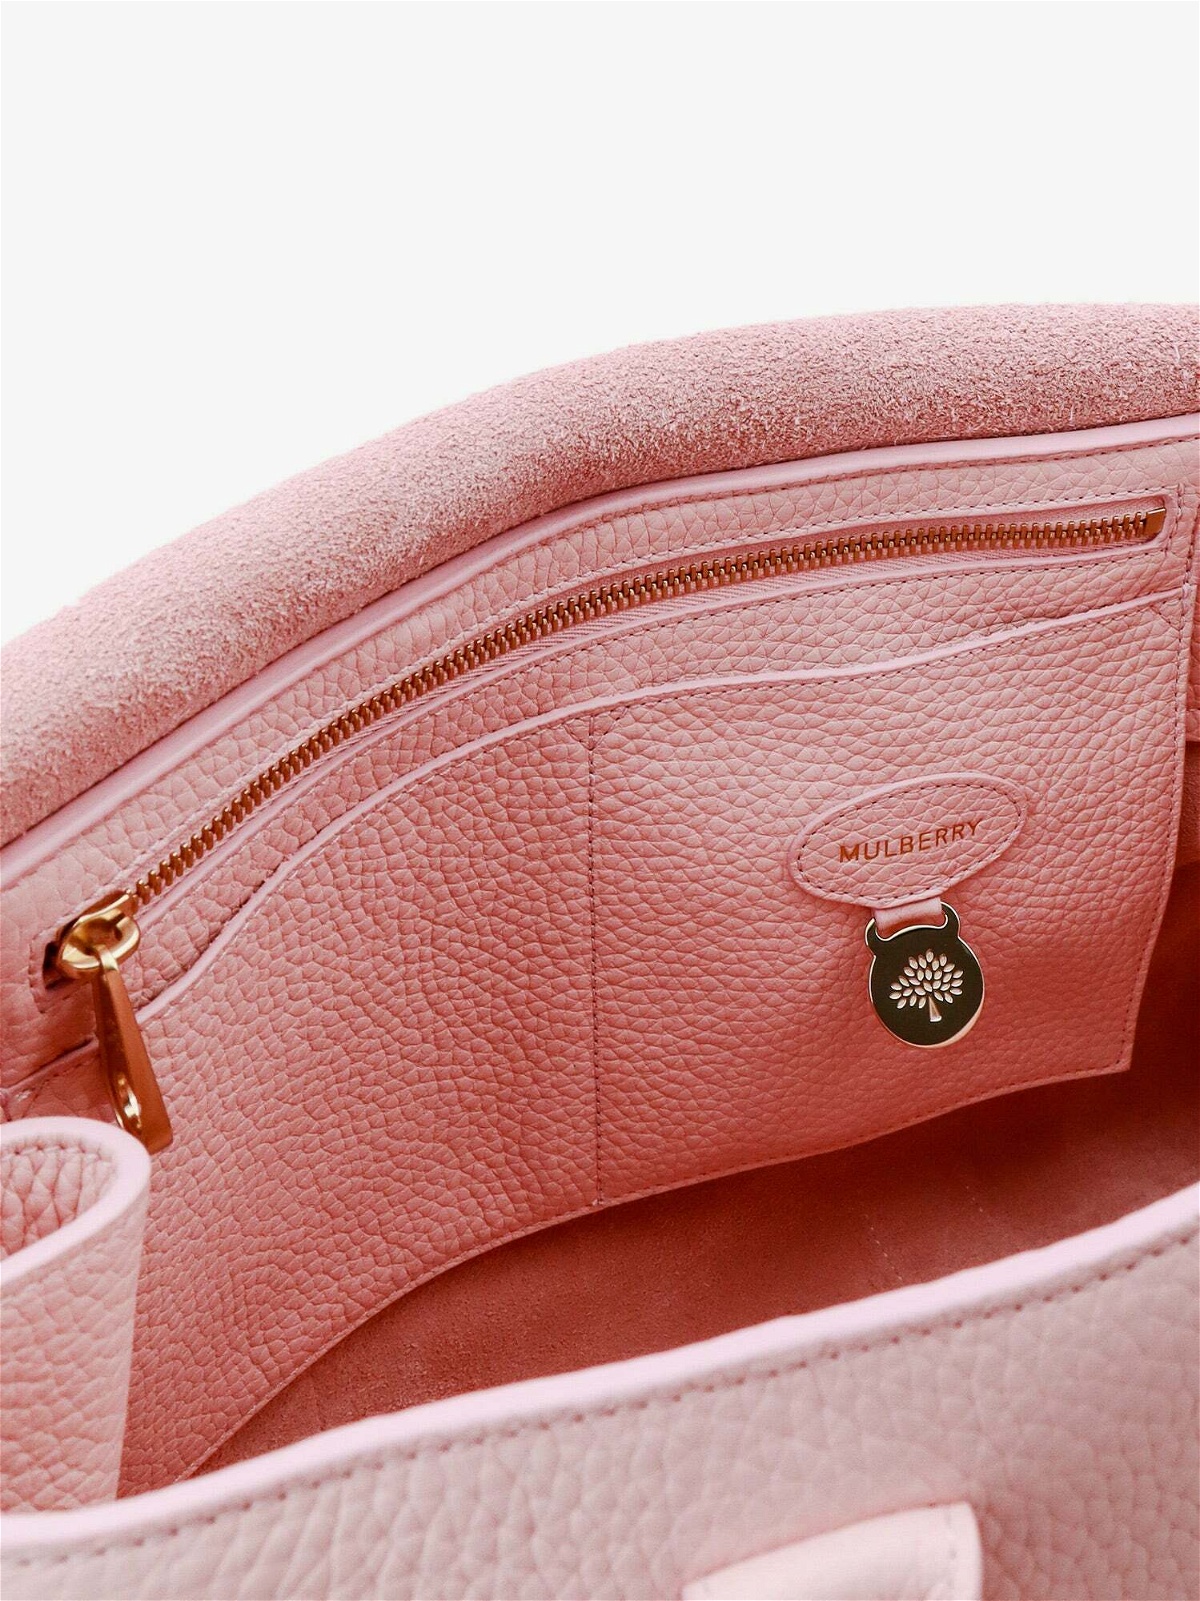 Authentic Mulberry Alexa unused handbag, rare pastel pink colour | eBay